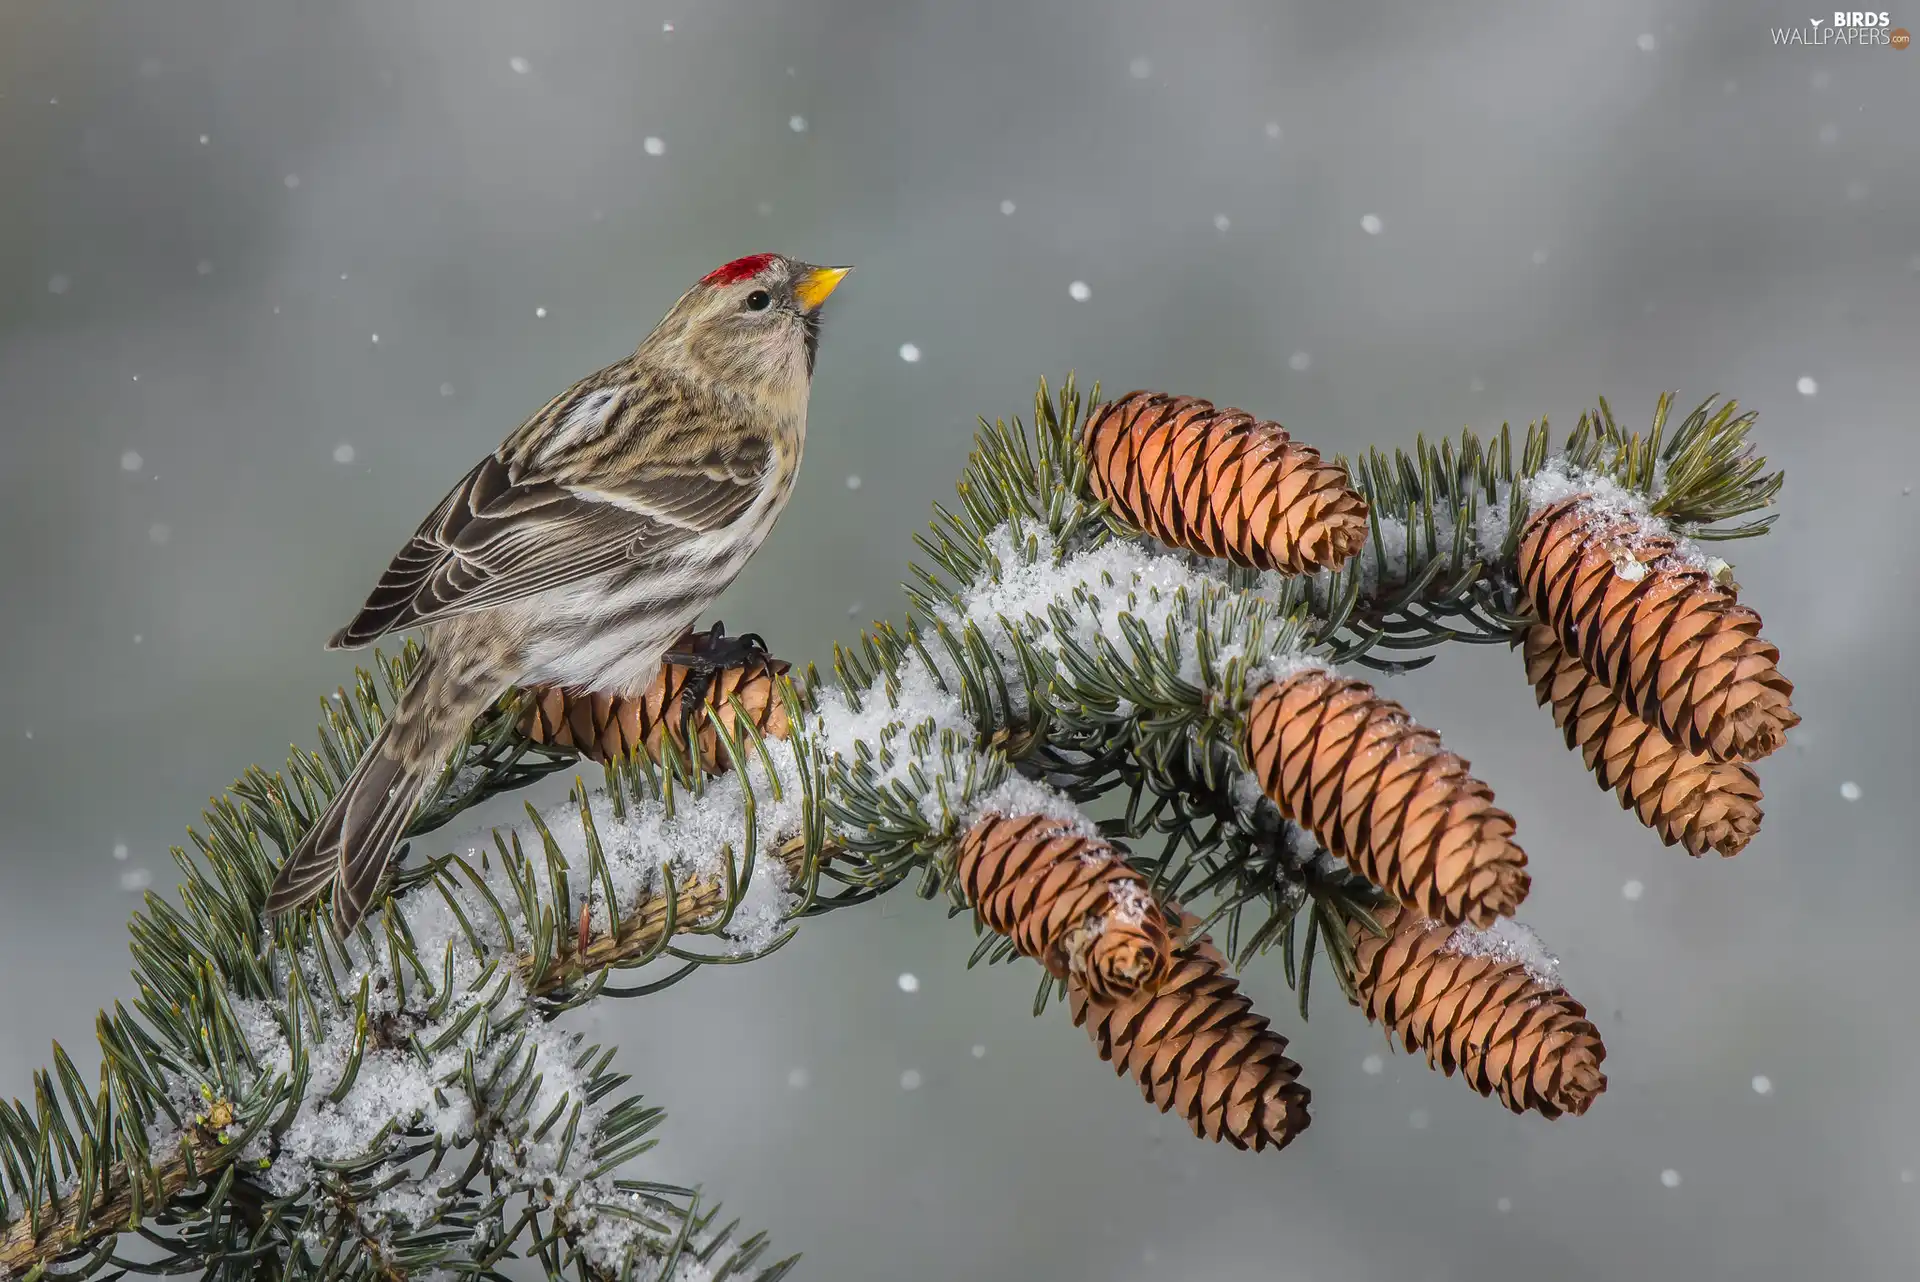 twig, Bird, cones, snow, spruce, Common Redpoll